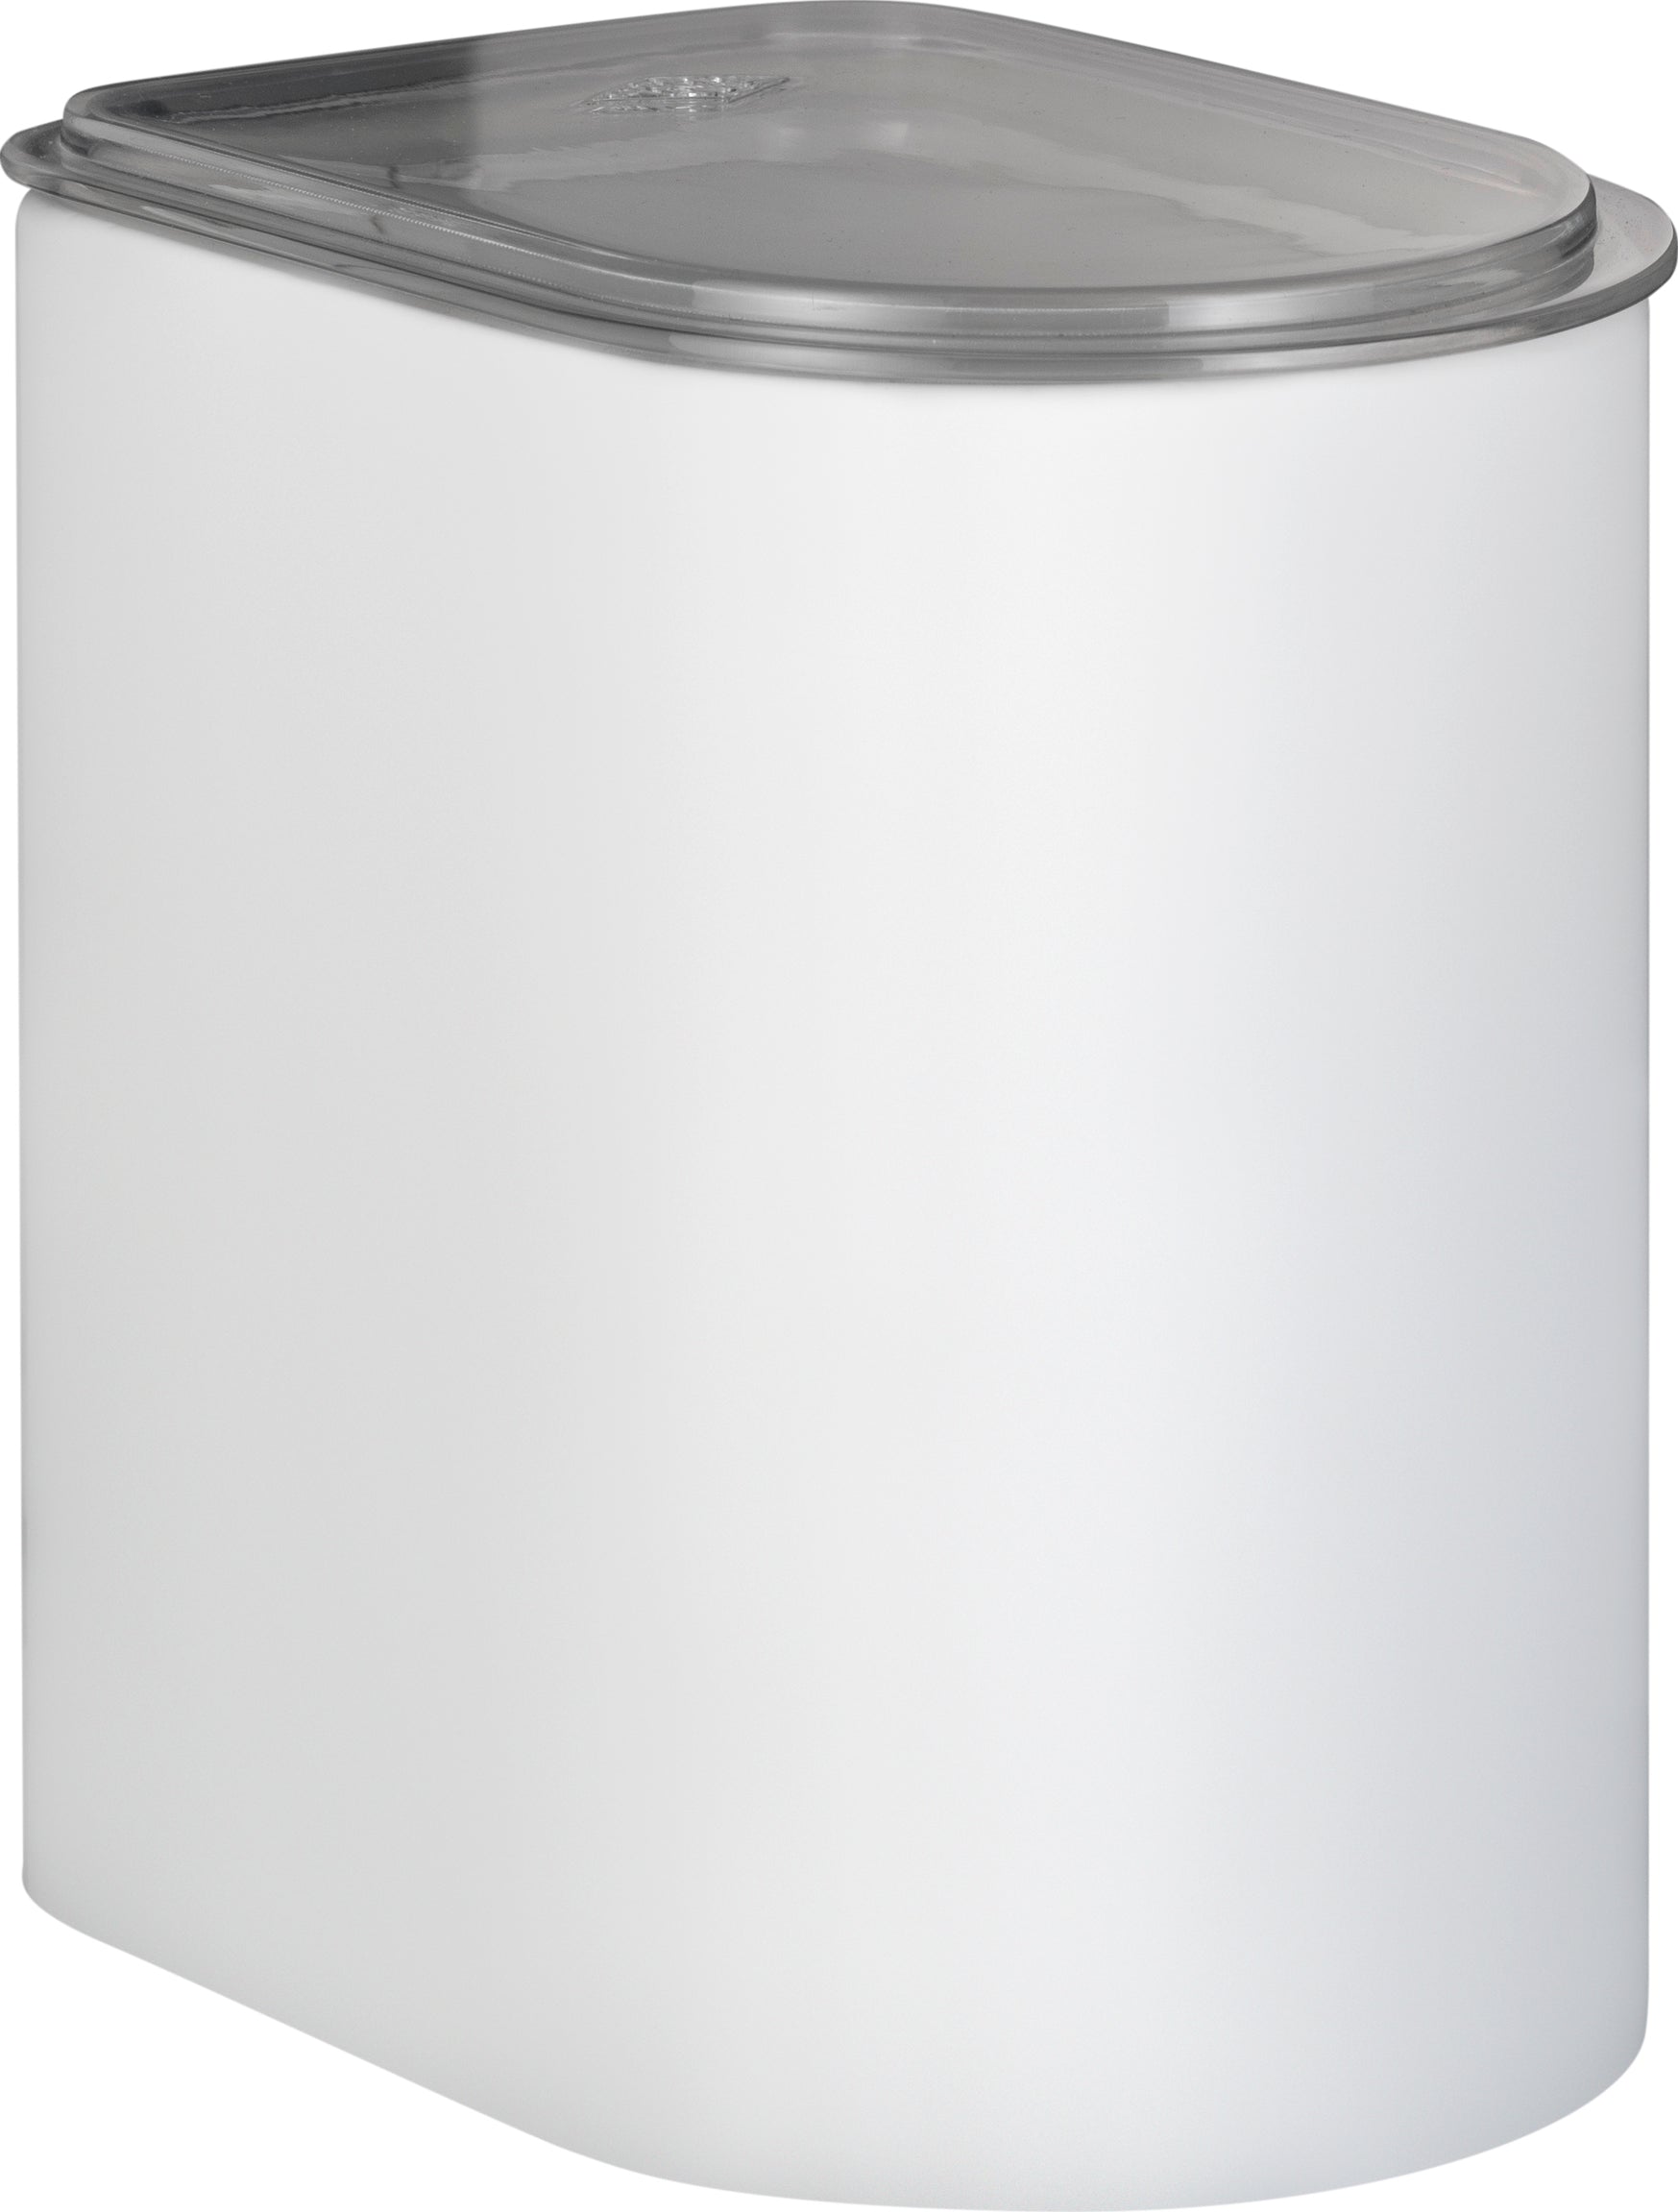 Canister de Wesco 2,2 litro con tapa acrílica, Matt White